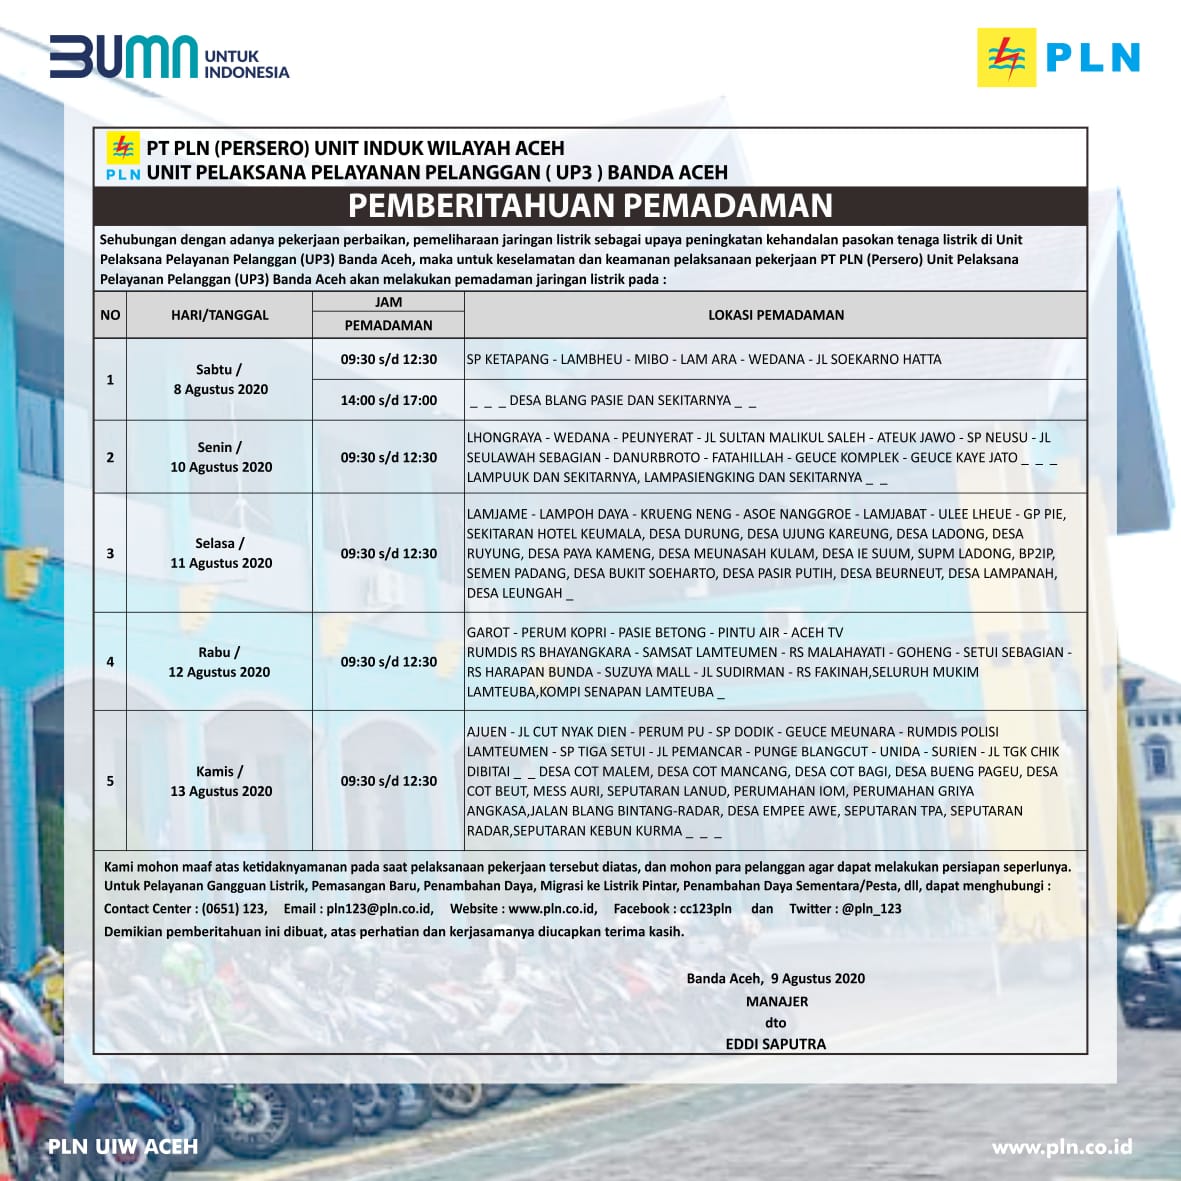 Perbaikan, PT PLN UP3 Banda Aceh Keluarkan Pemberitahuan Pemadaman, Cek Jadwalnya